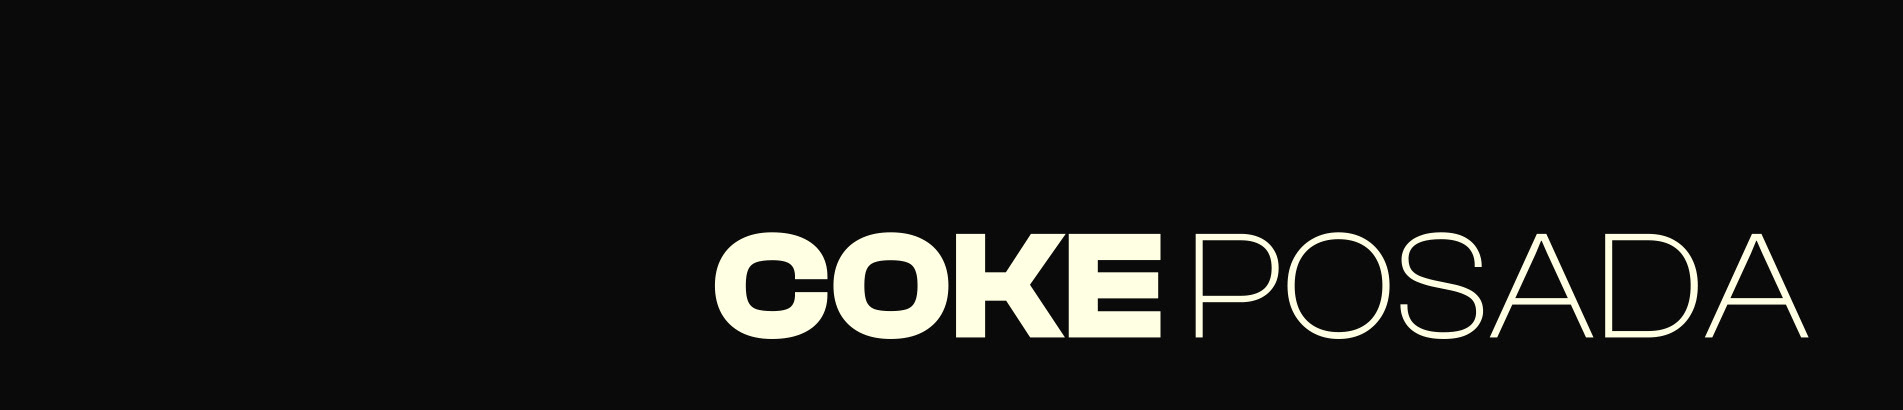 Banner profilu uživatele Jorge Posada (Coke)